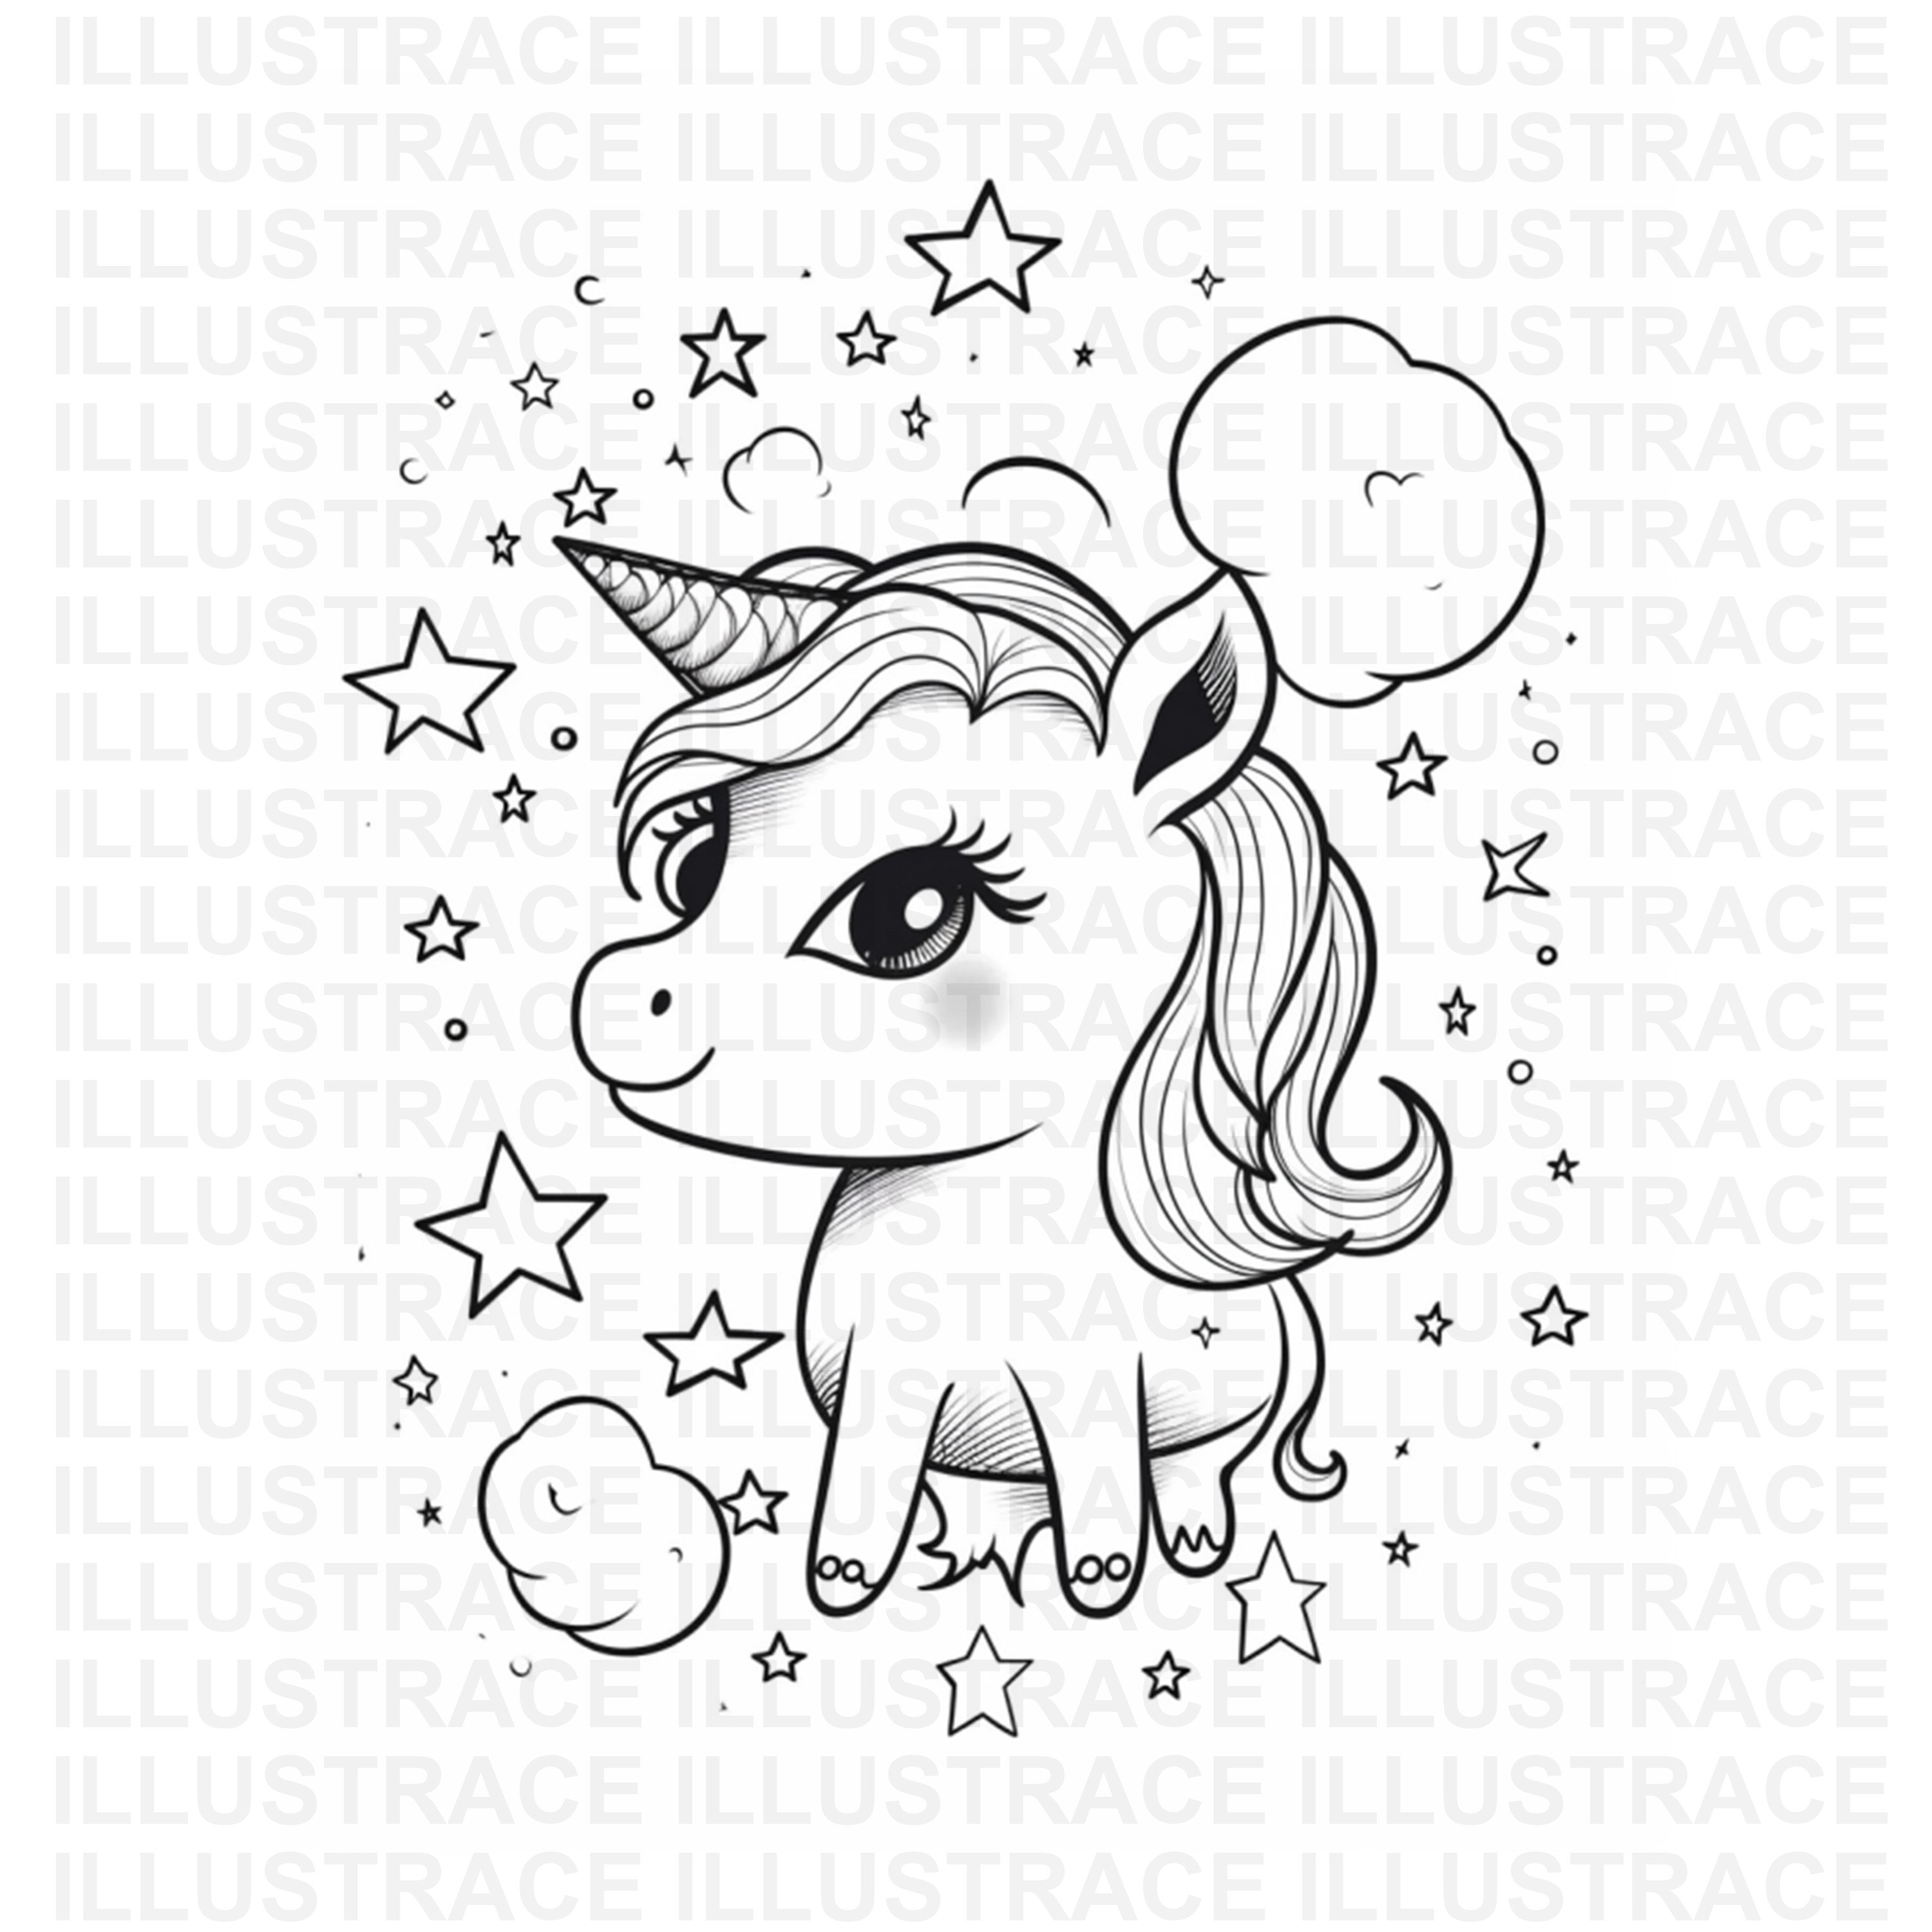 ArtMaker Ultimate Drawing Kit: Unicorns - Kits - Adult Colouring